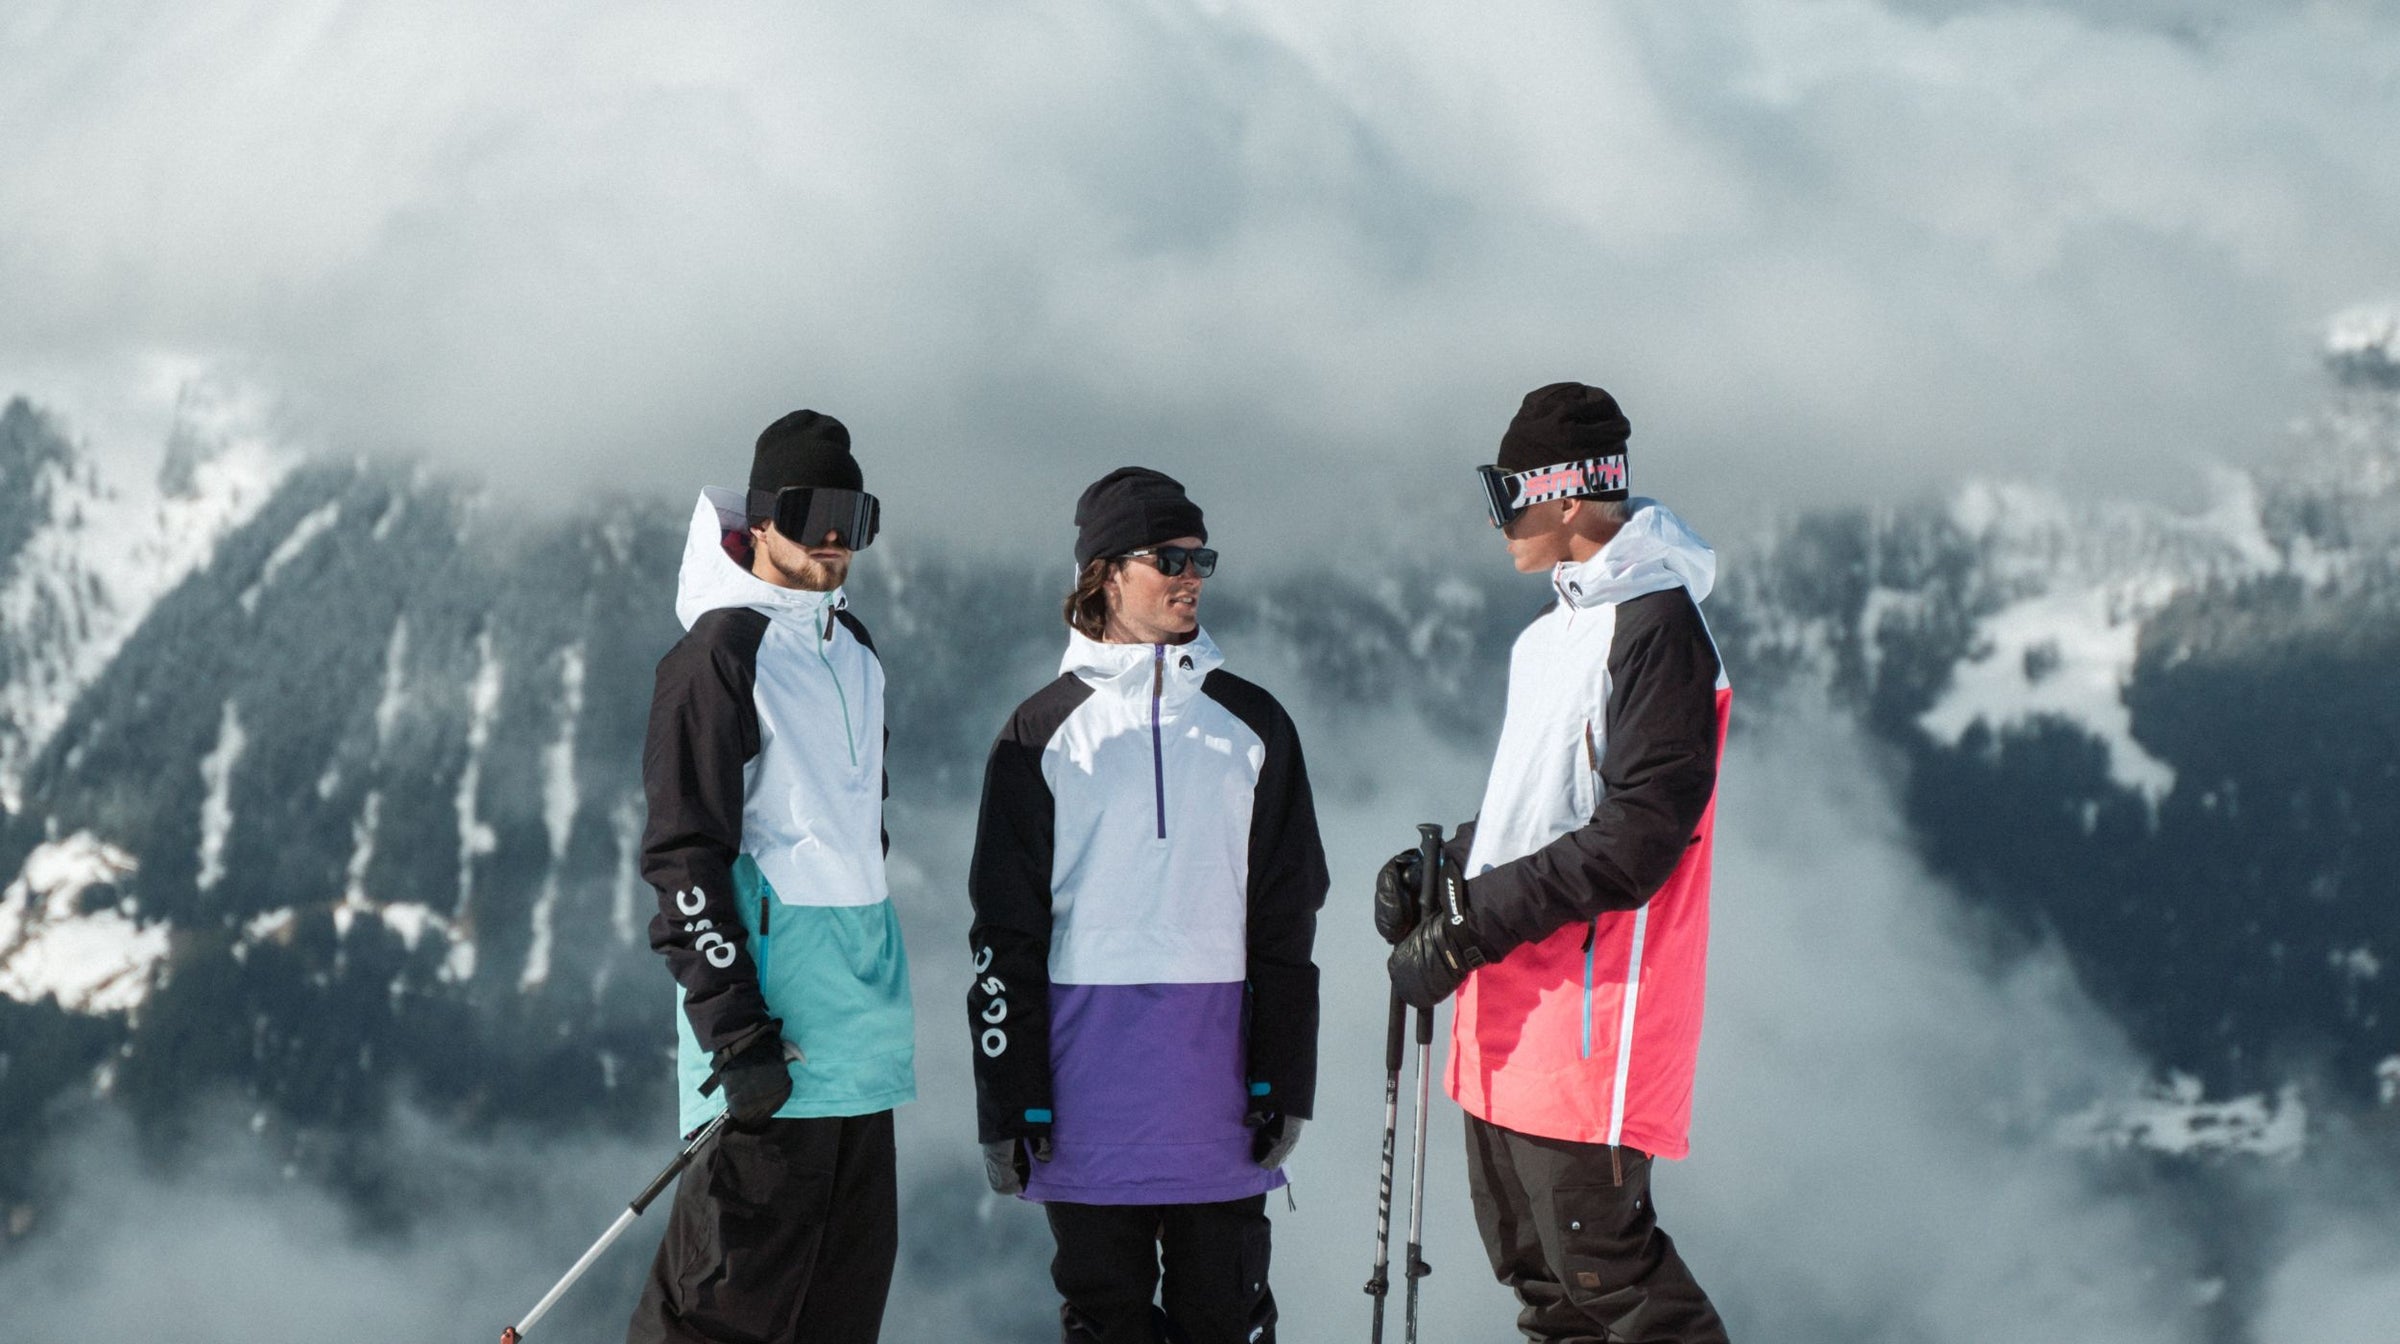 Mens Ski Suits  Snow Suit Onesies – OOSC Clothing